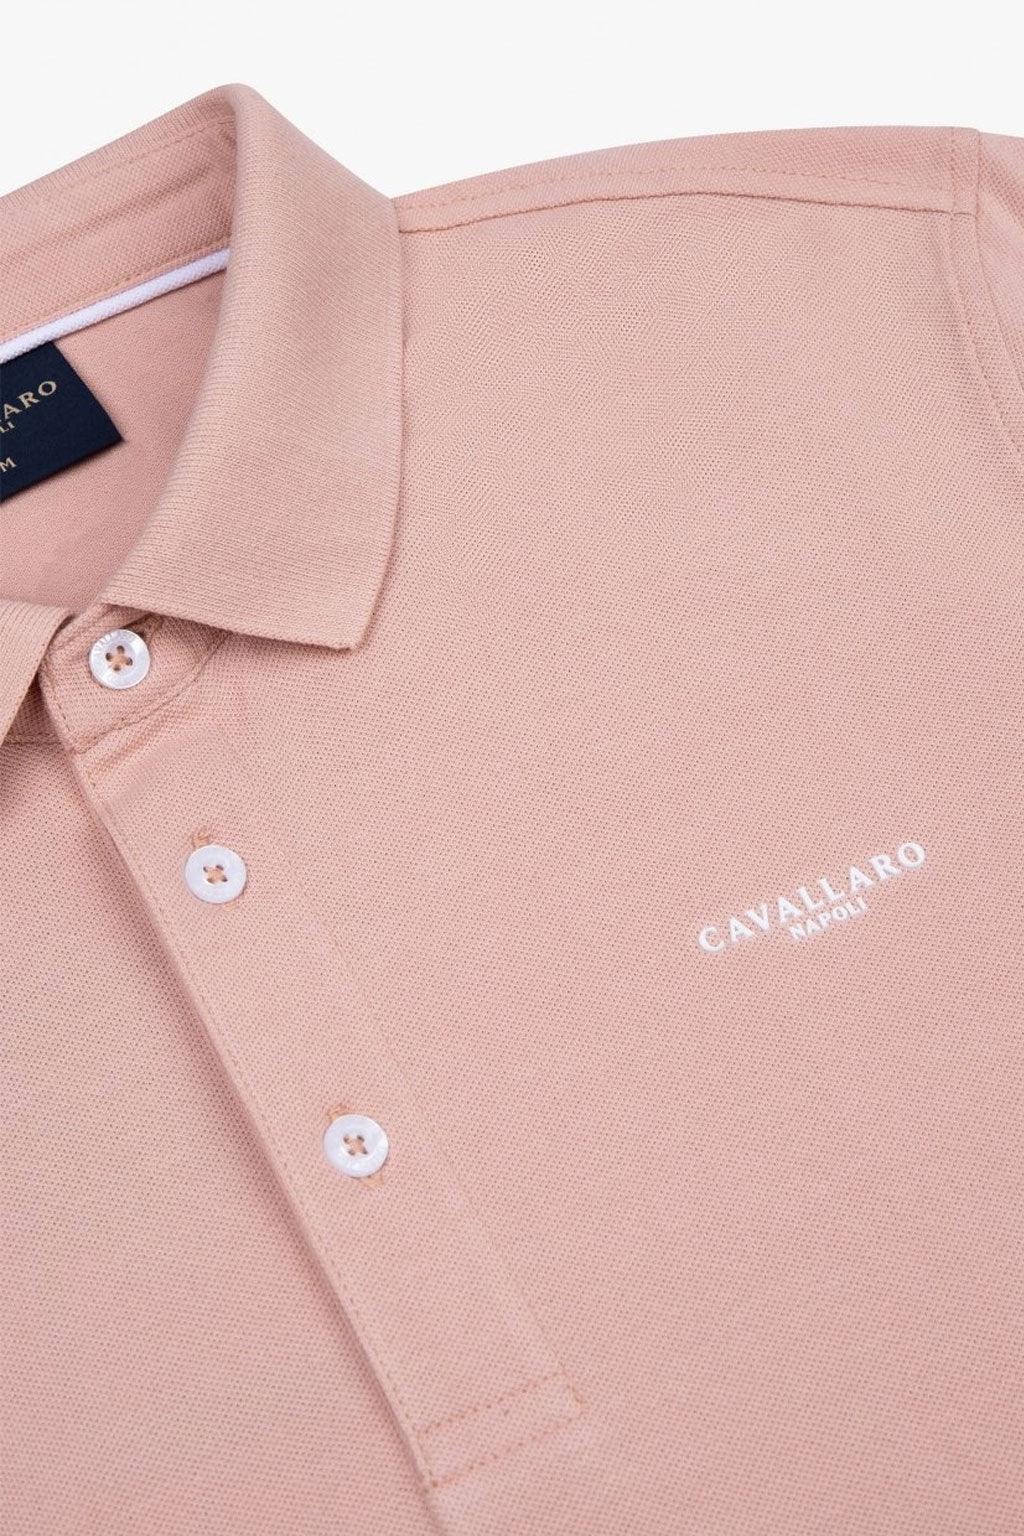 Cavallaro polo | Big Boss | the menswear concept